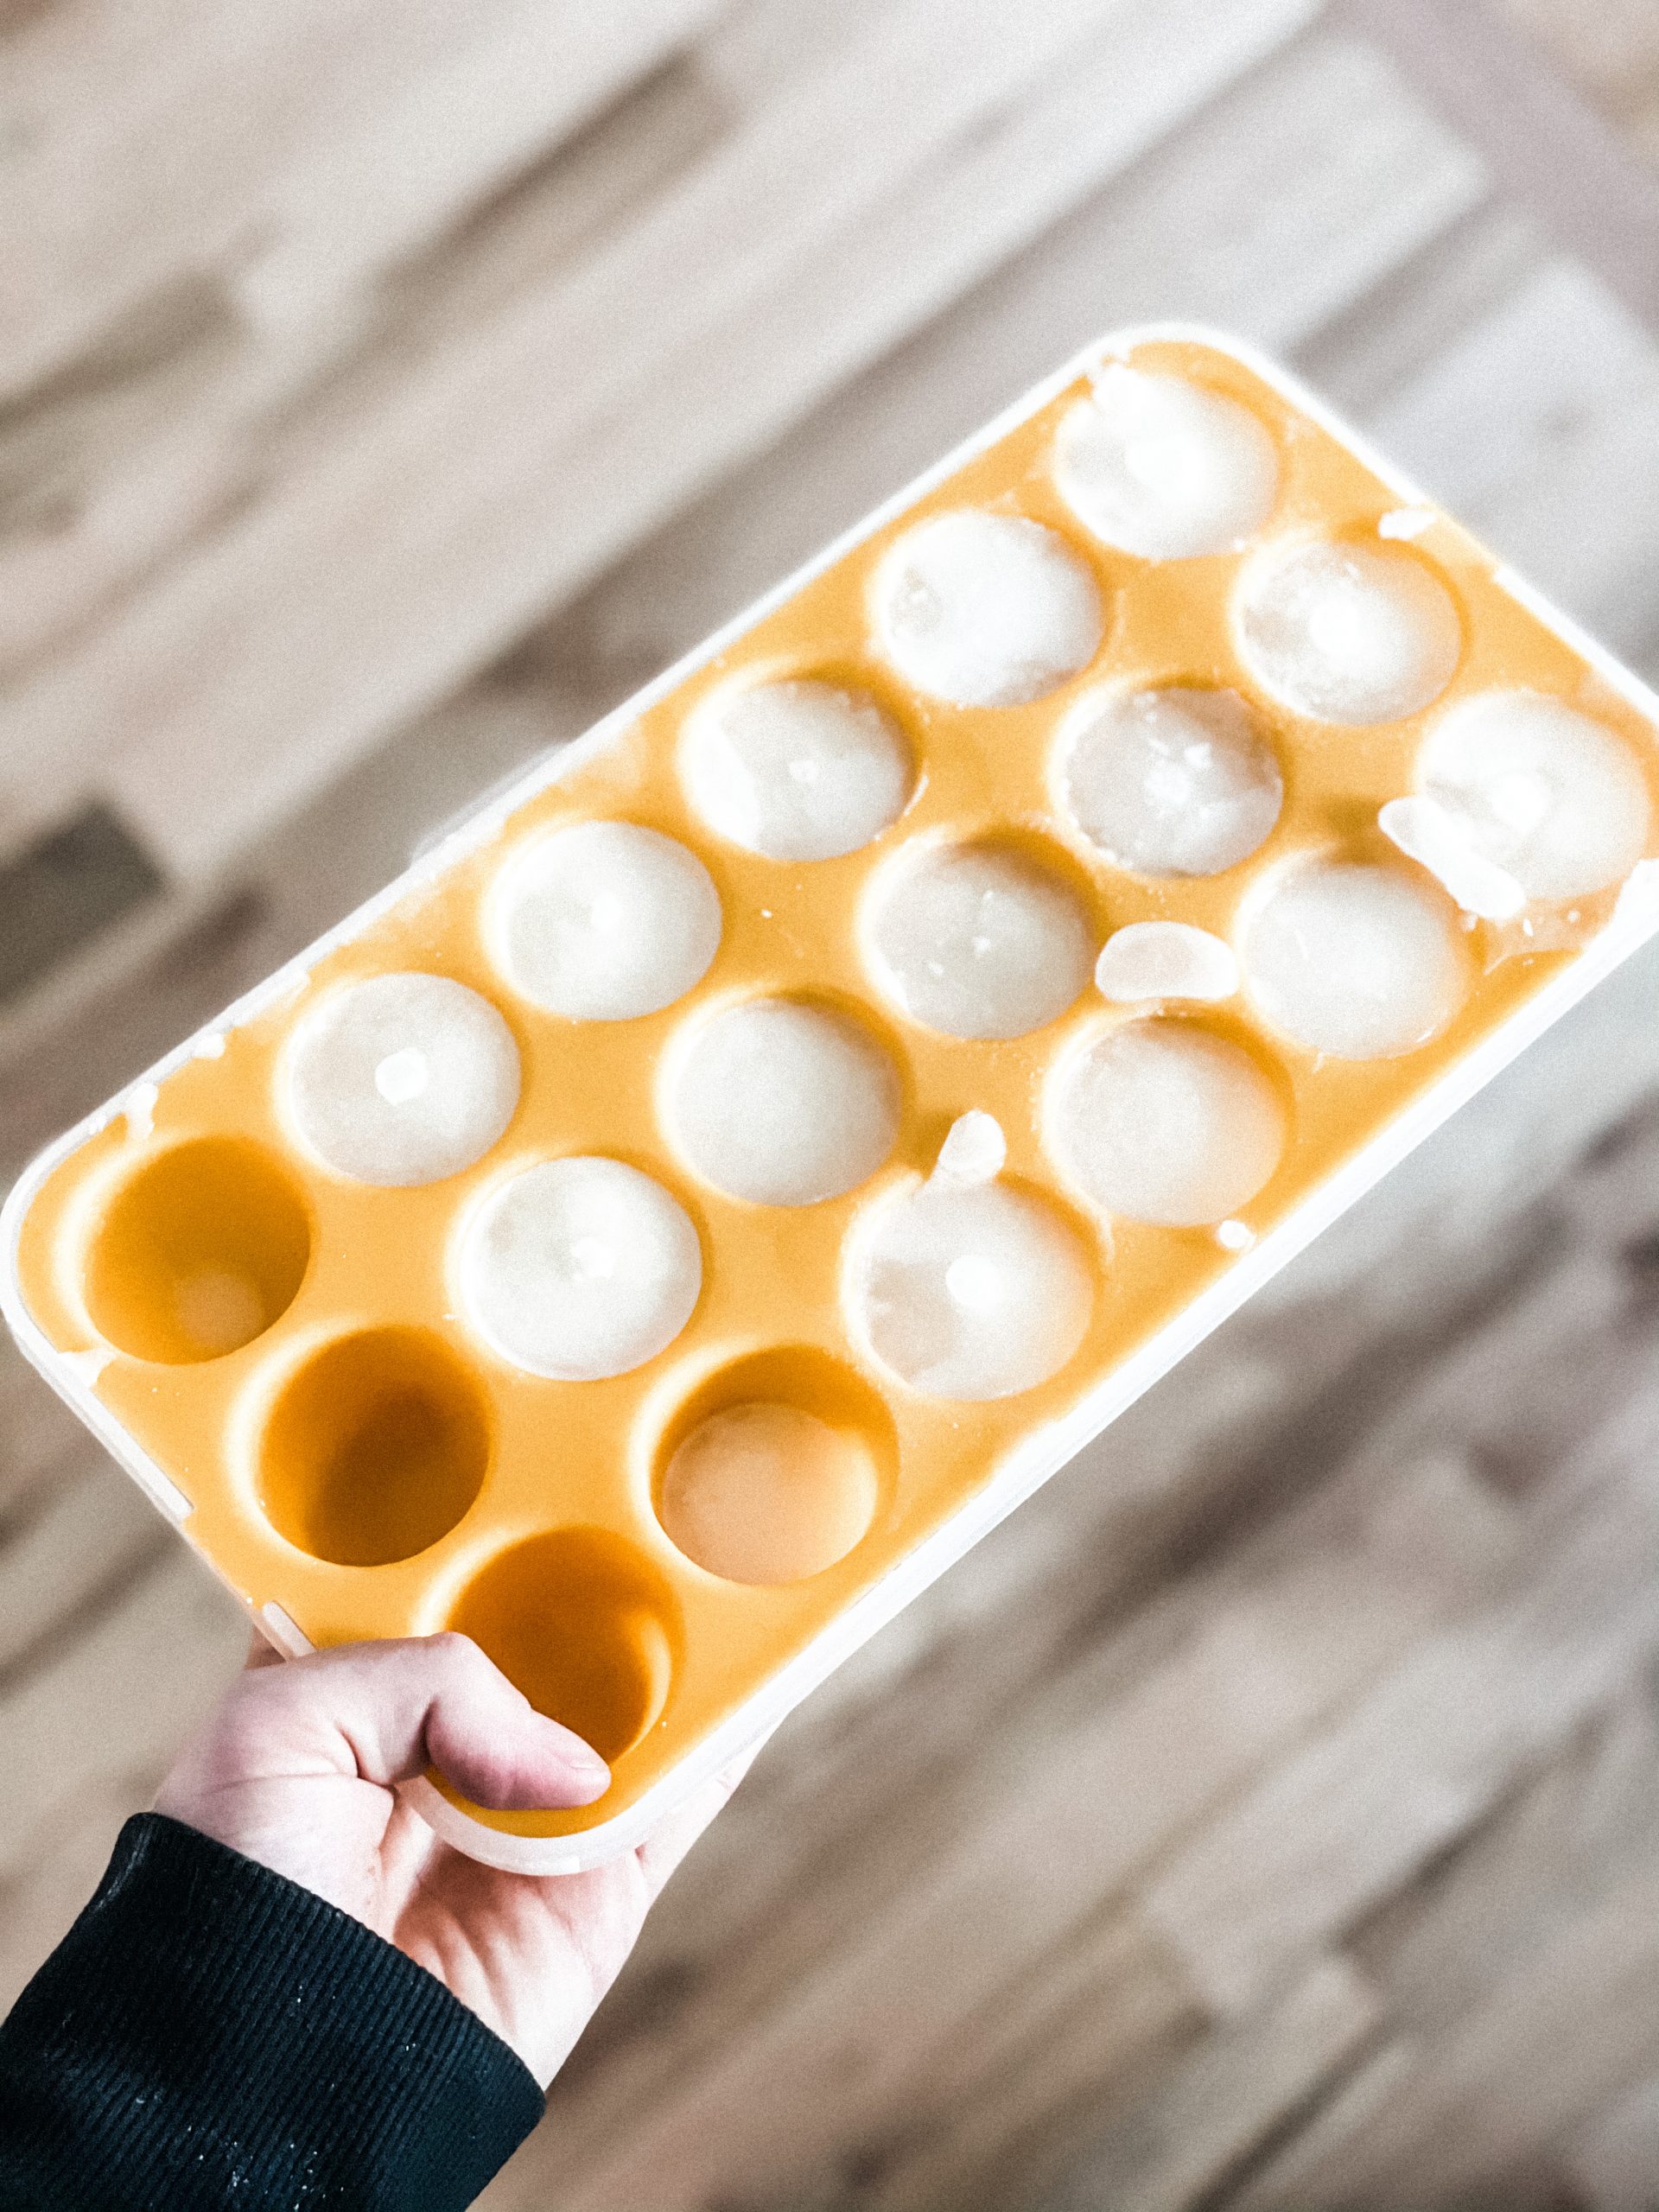 orange silicone ice cube tray with breast milk